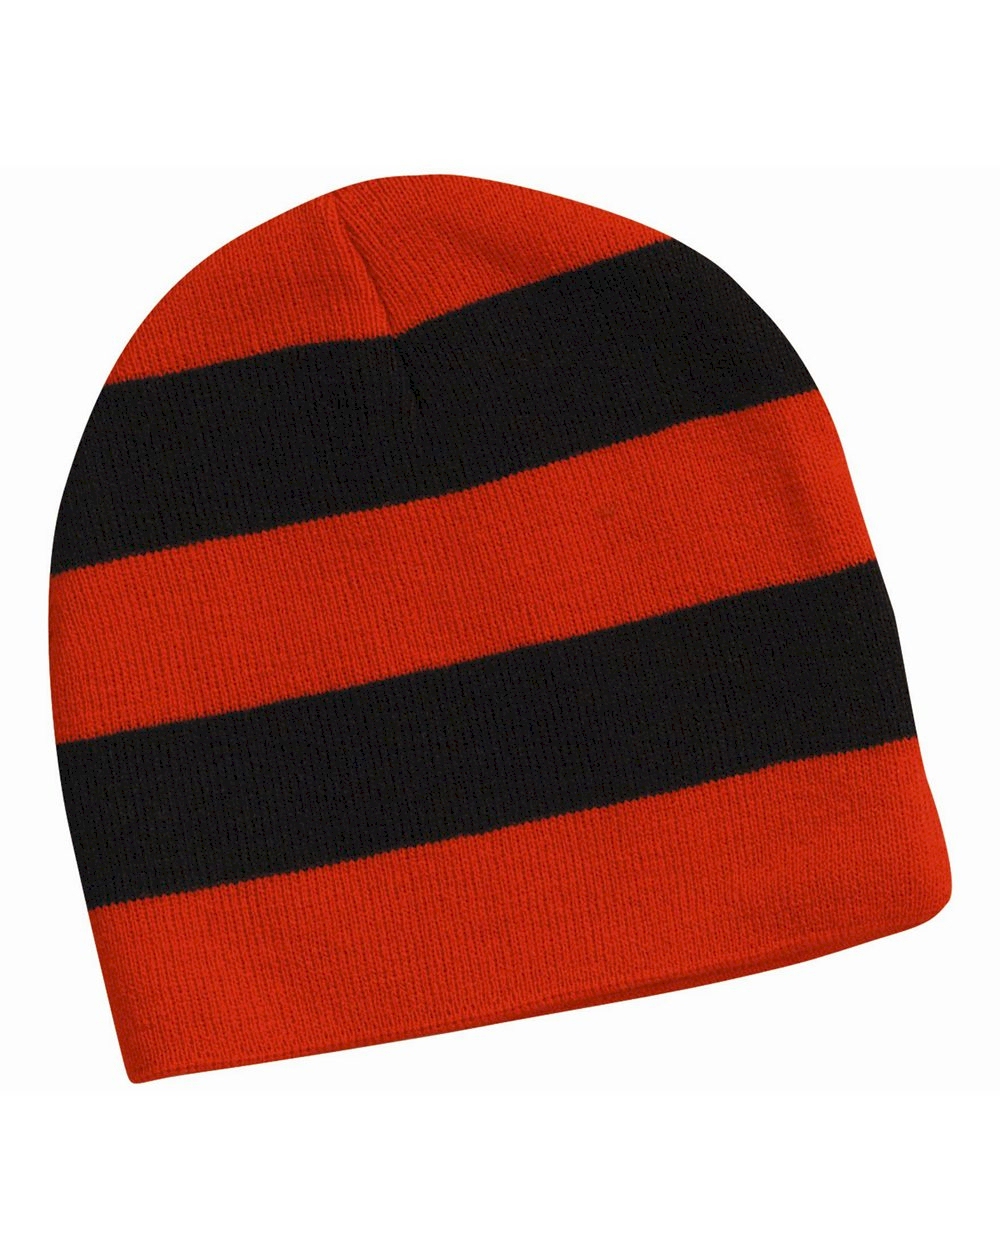 Rugby Striped Knit Beanie Embroidery Blanks - Orange/Black